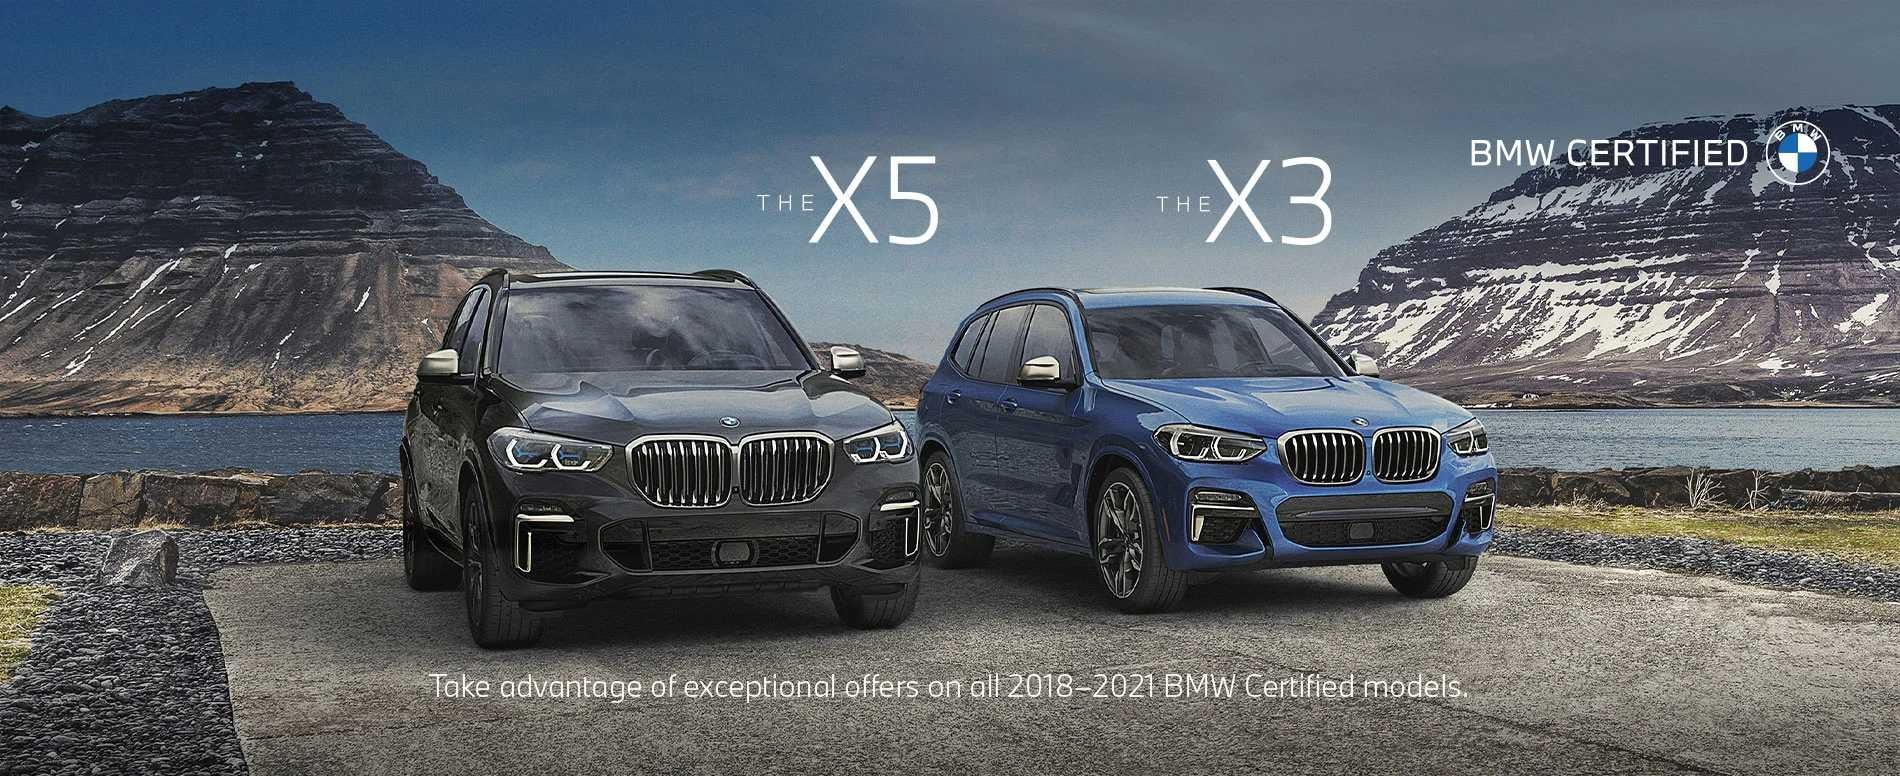 BMW Certified models.